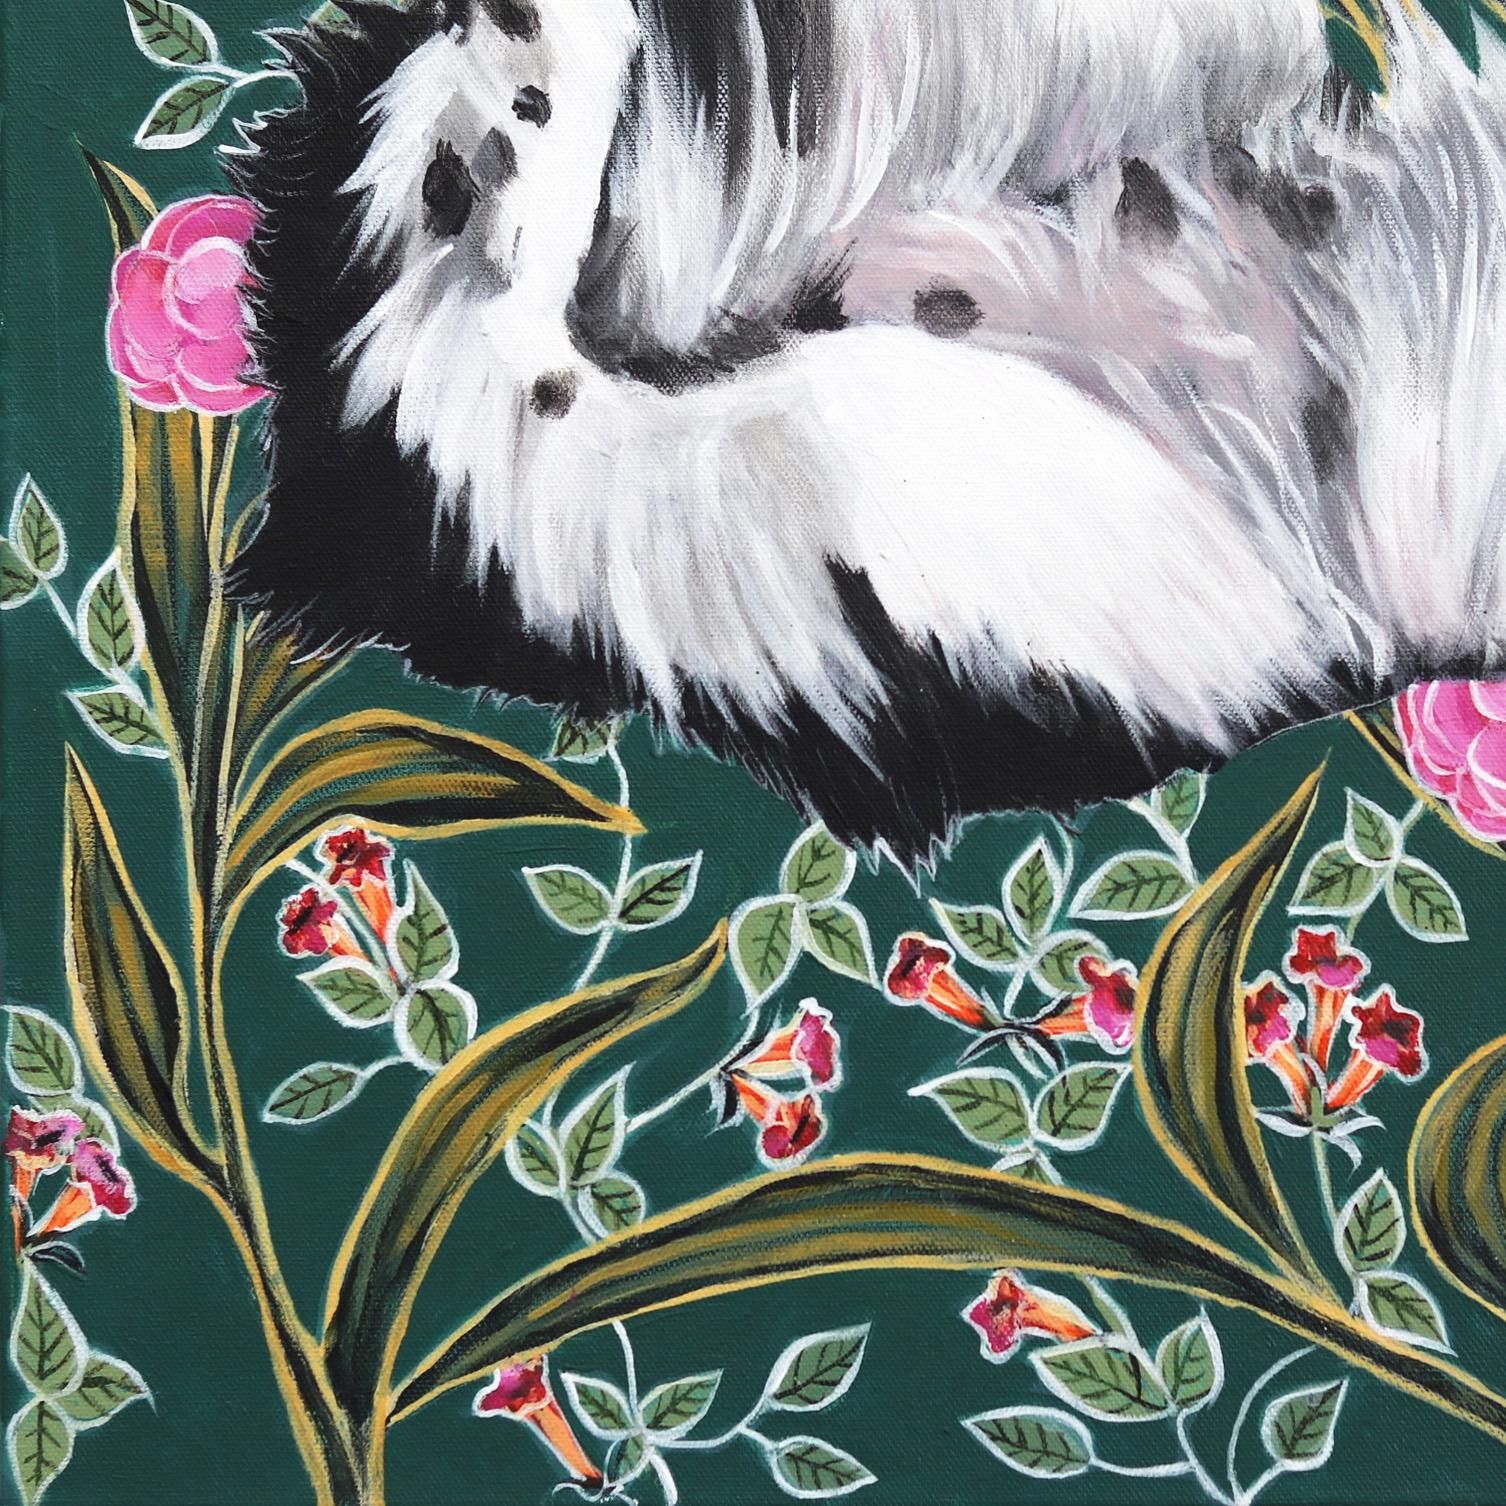 Border Collie  - Original Vivid Figurative Animal Painting on Canvas 3